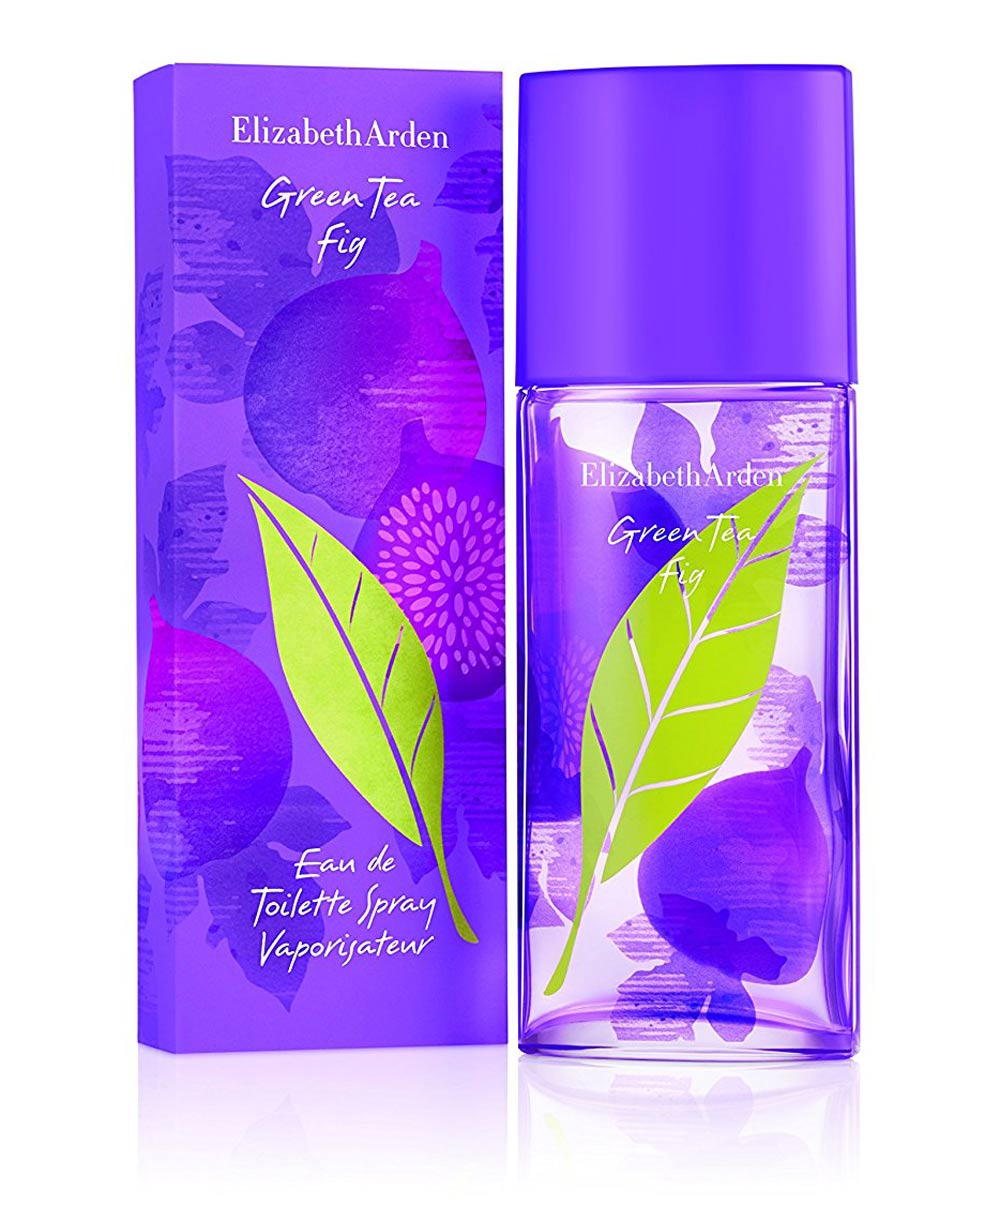 Green Tea Fig Elizabeth Arden perfume - a new fragrance for women 2018